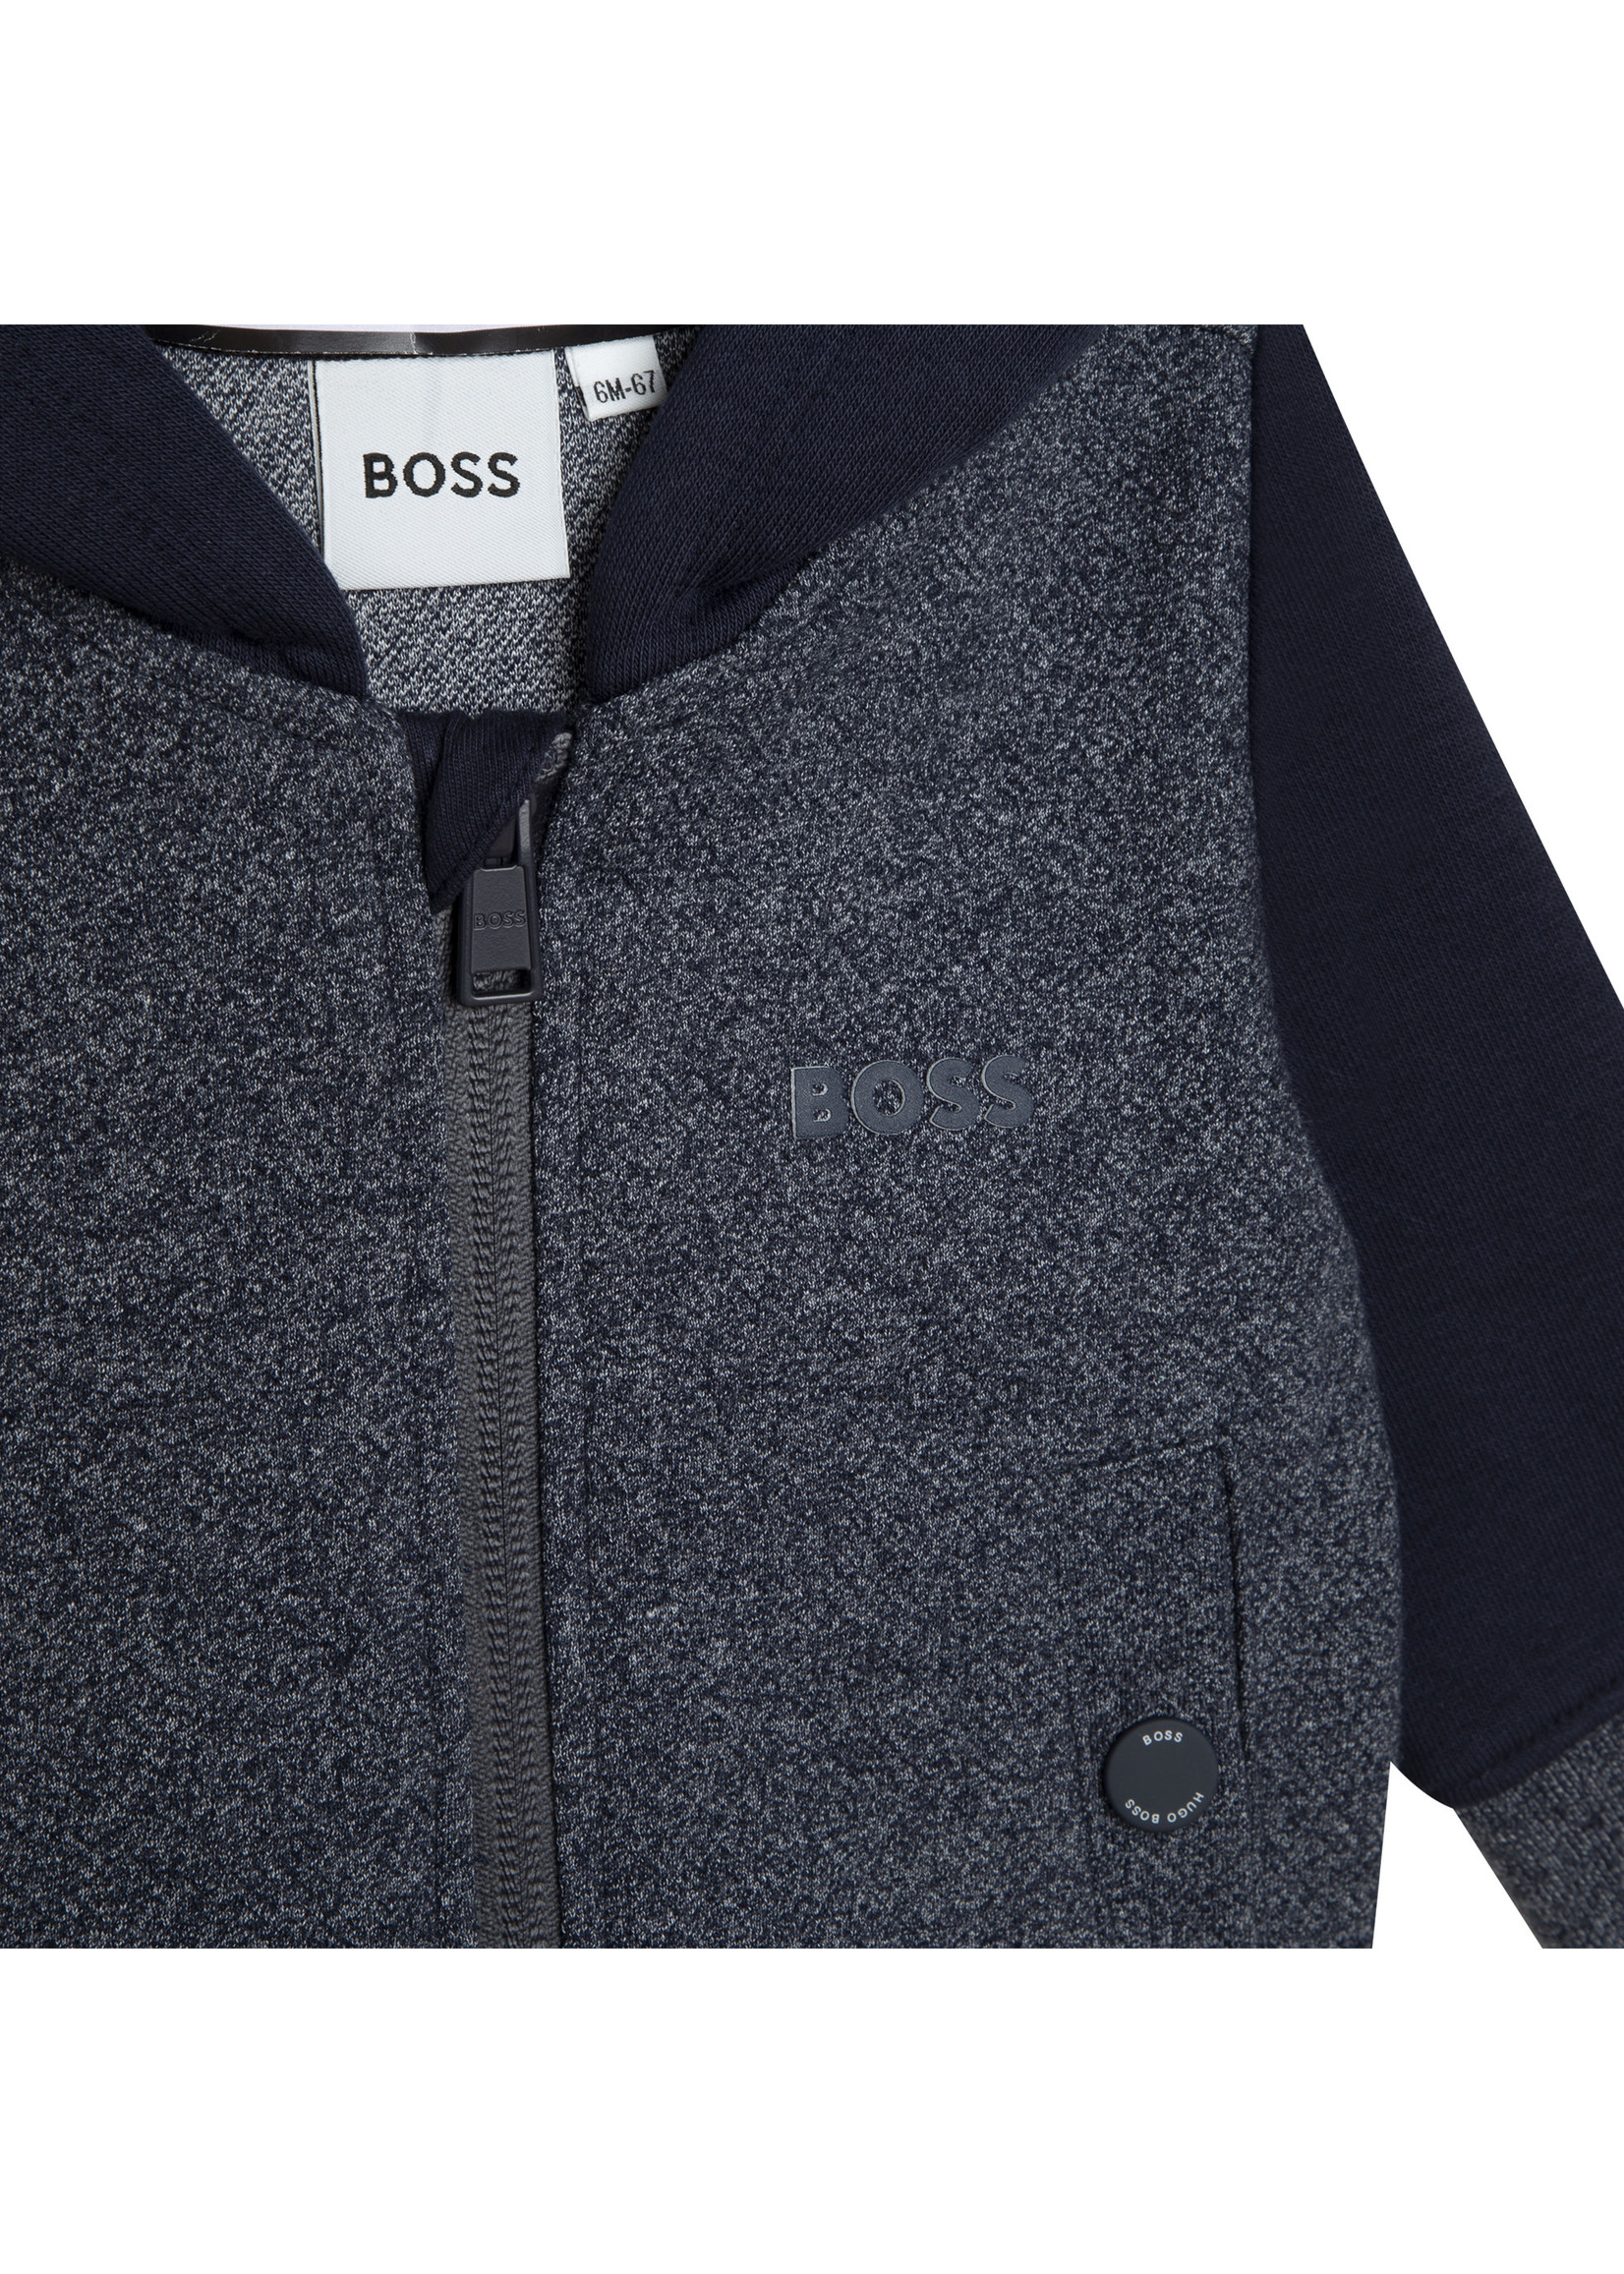 BOSS BOSS Babyboy zipped hoodie navyblue print - J05974